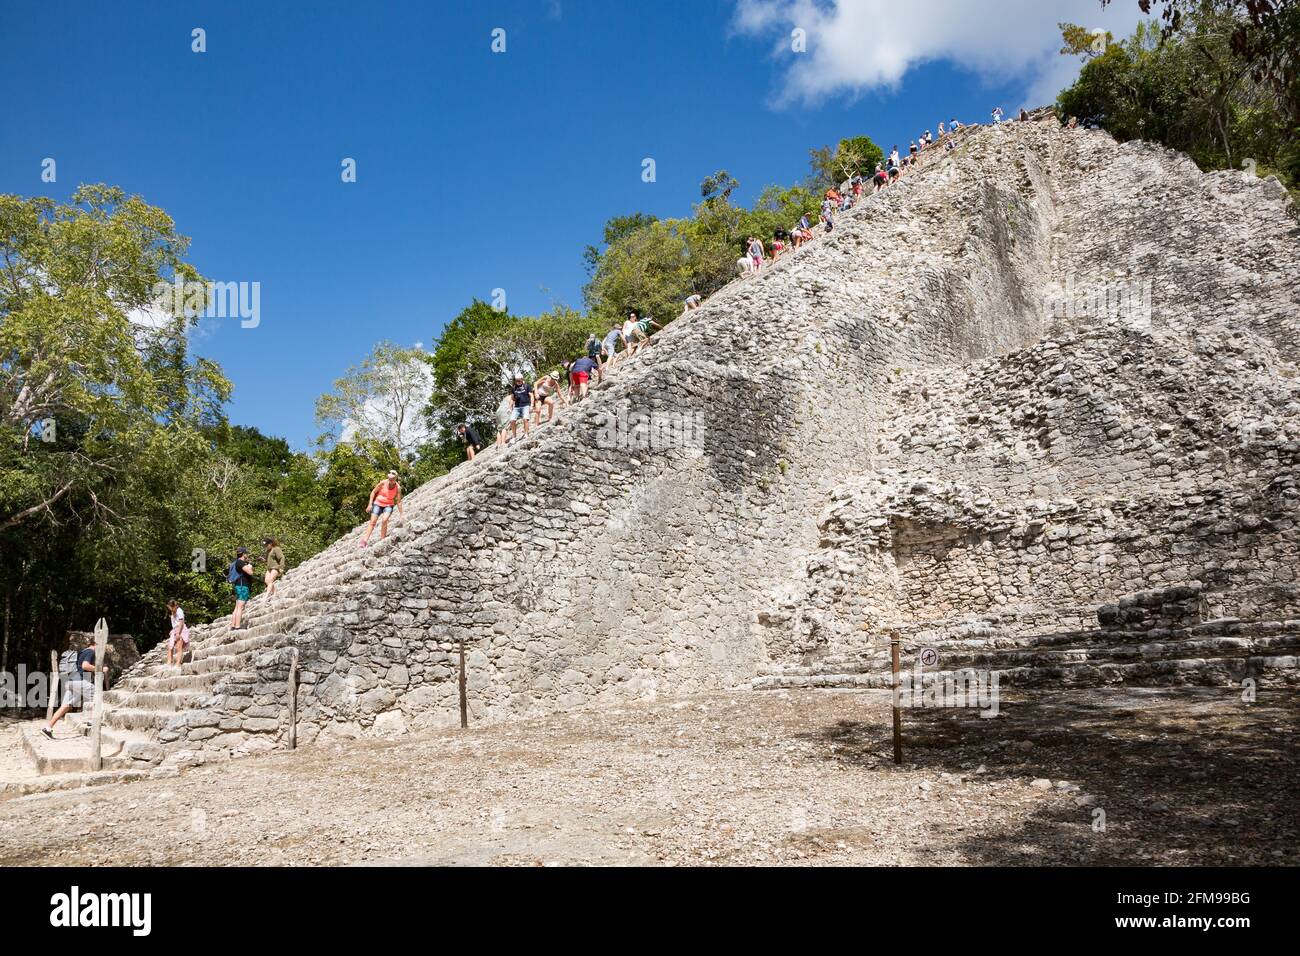 Coba, Mexico - January 31, 2018: Nohoch Mul, the tallest of all Mayan pyramids, Quintana Roo, Yucatan peninsula, Mexico Stock Photo